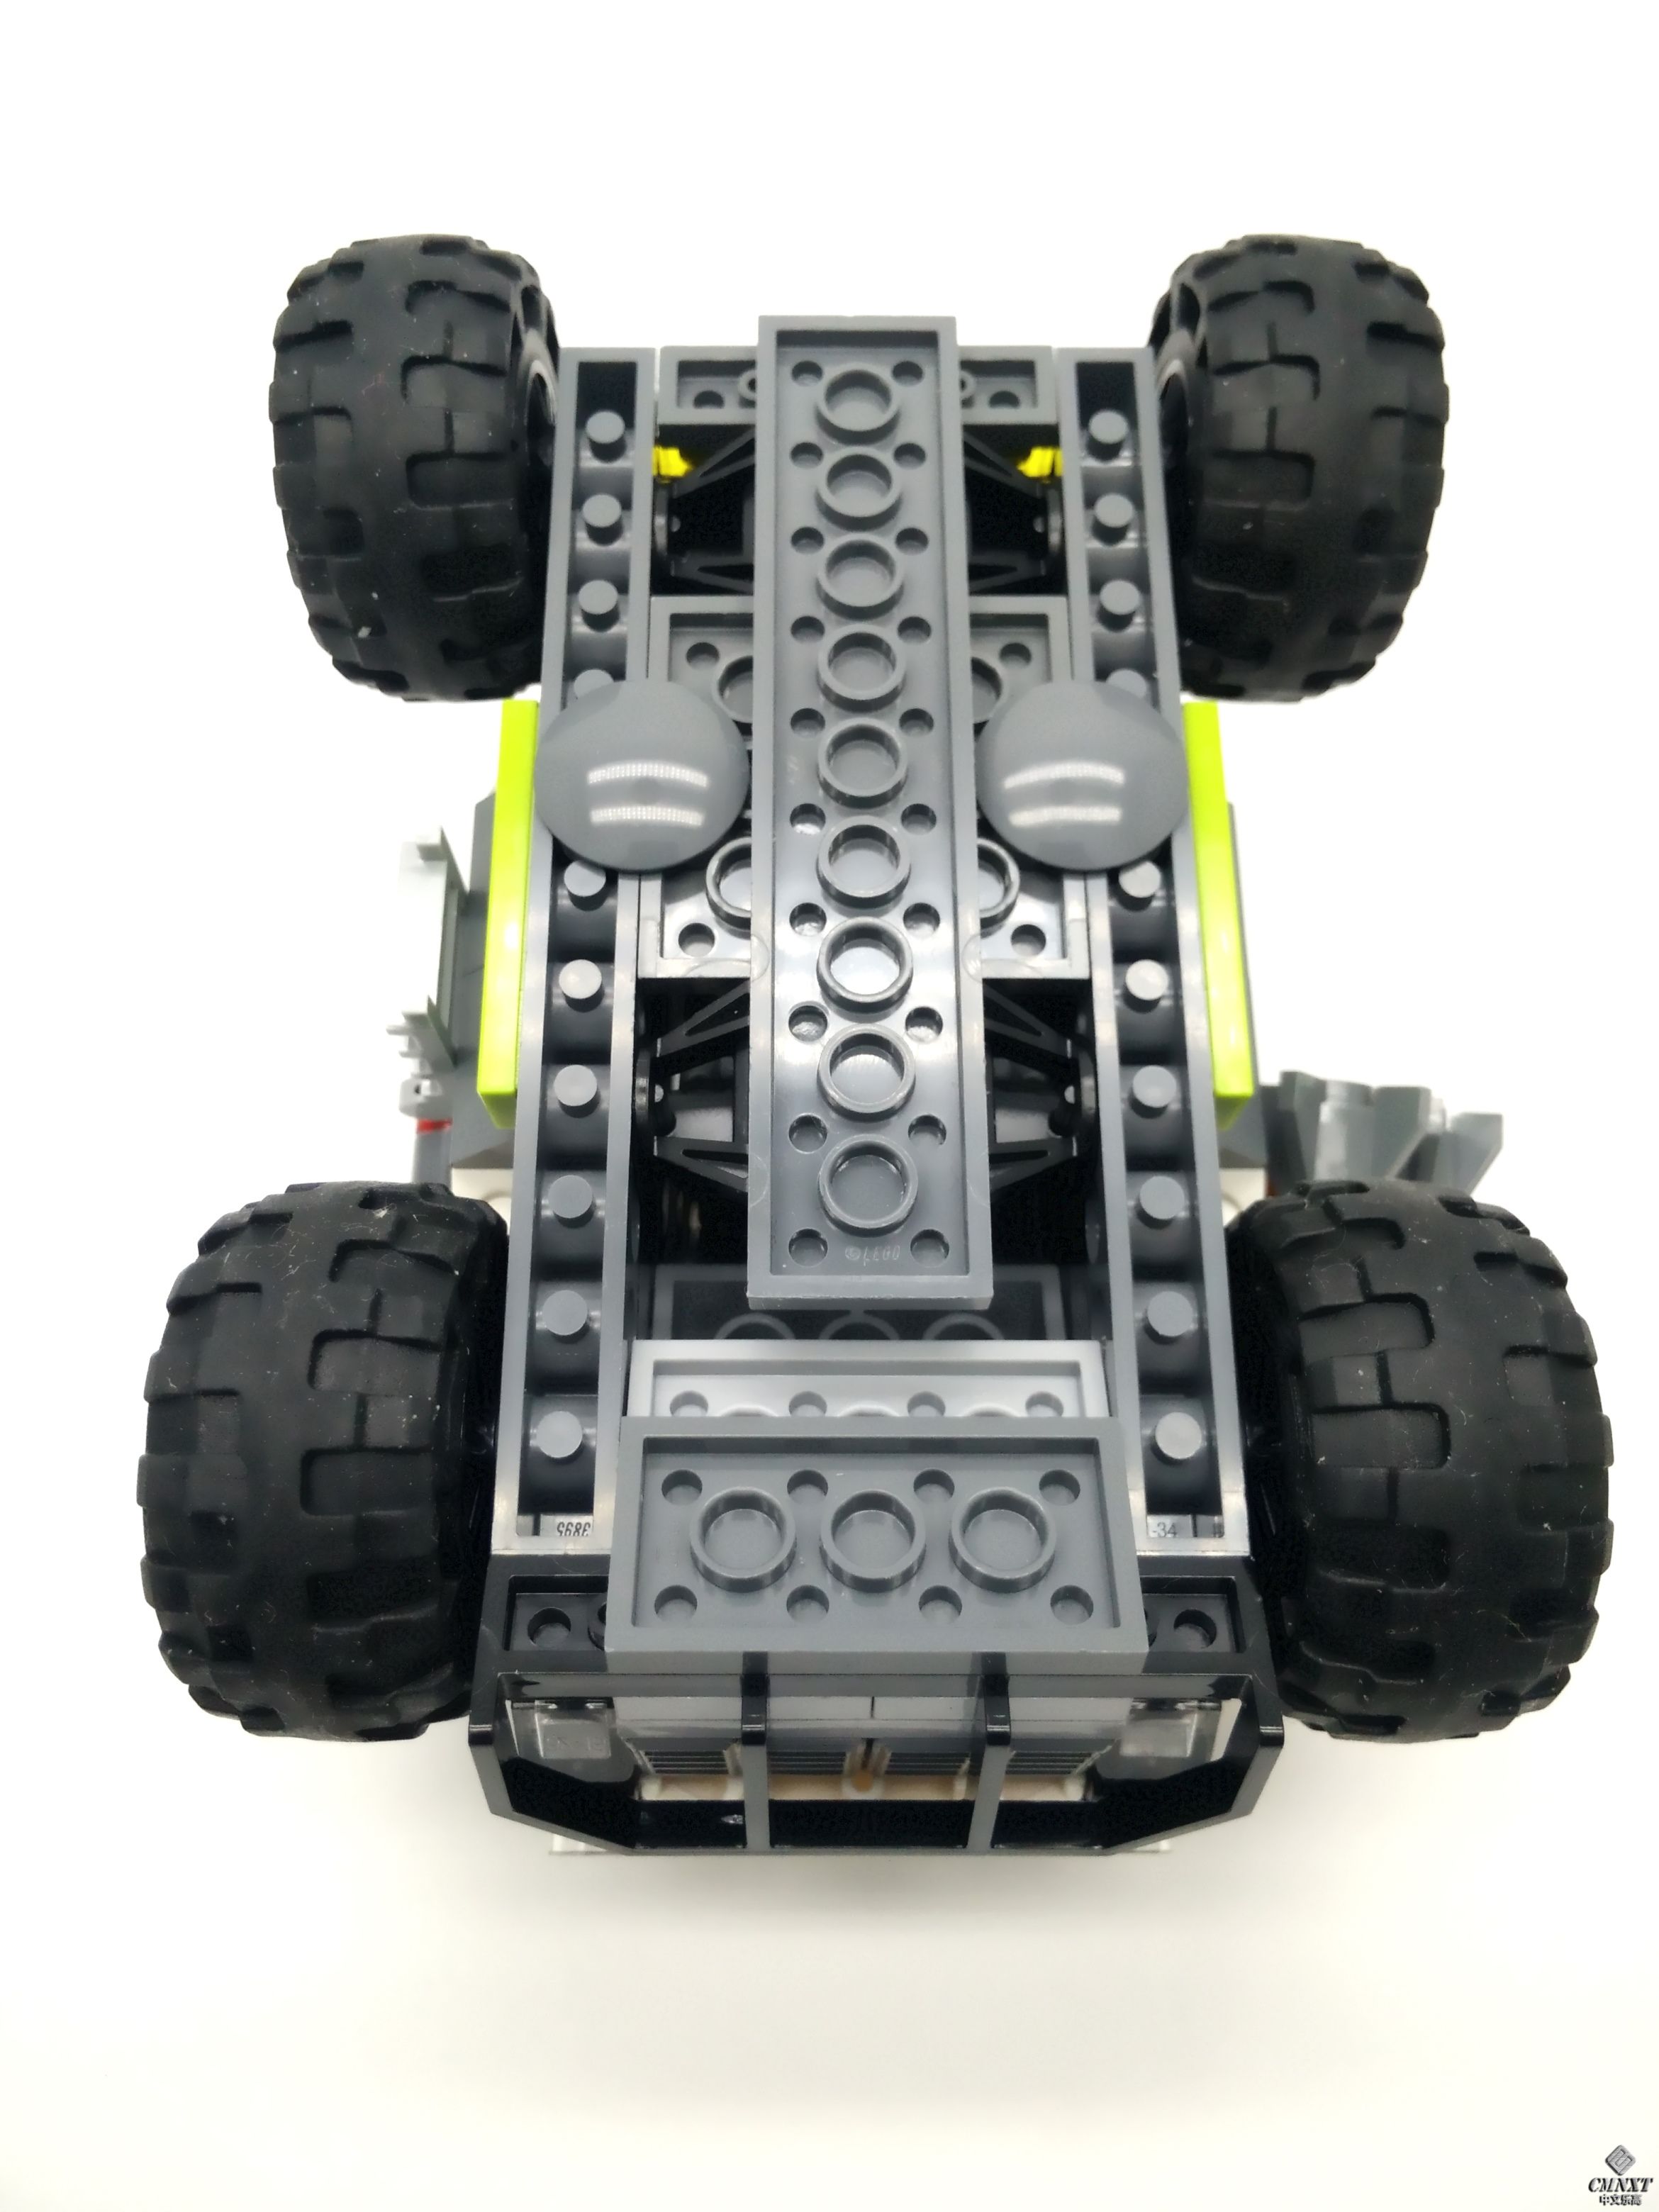 LEGO MOC - 76041 Super Hero Battle Vehicle Enhanced 09.jpg